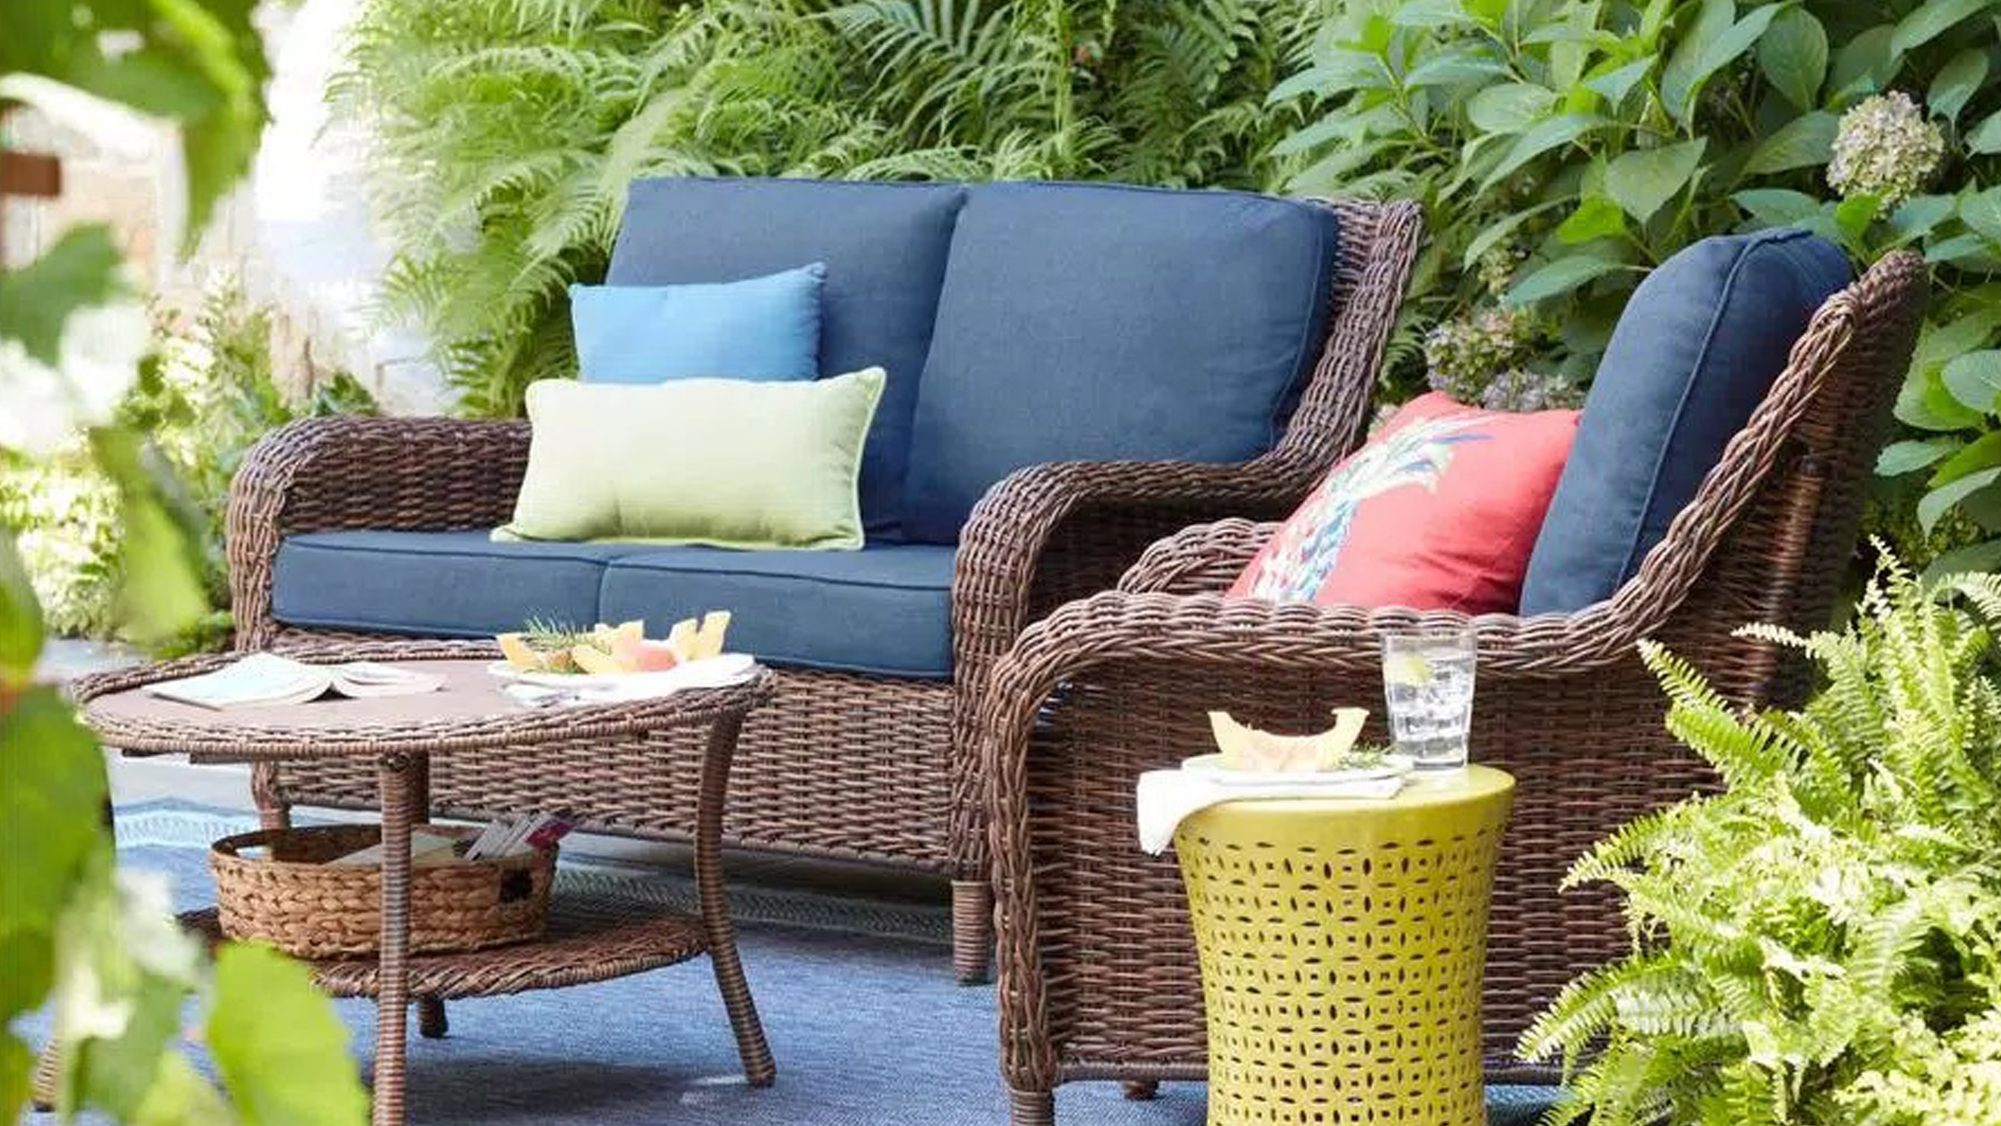 Ing The Best Garden Furniture, What Is The Best Type Of Garden Furniture